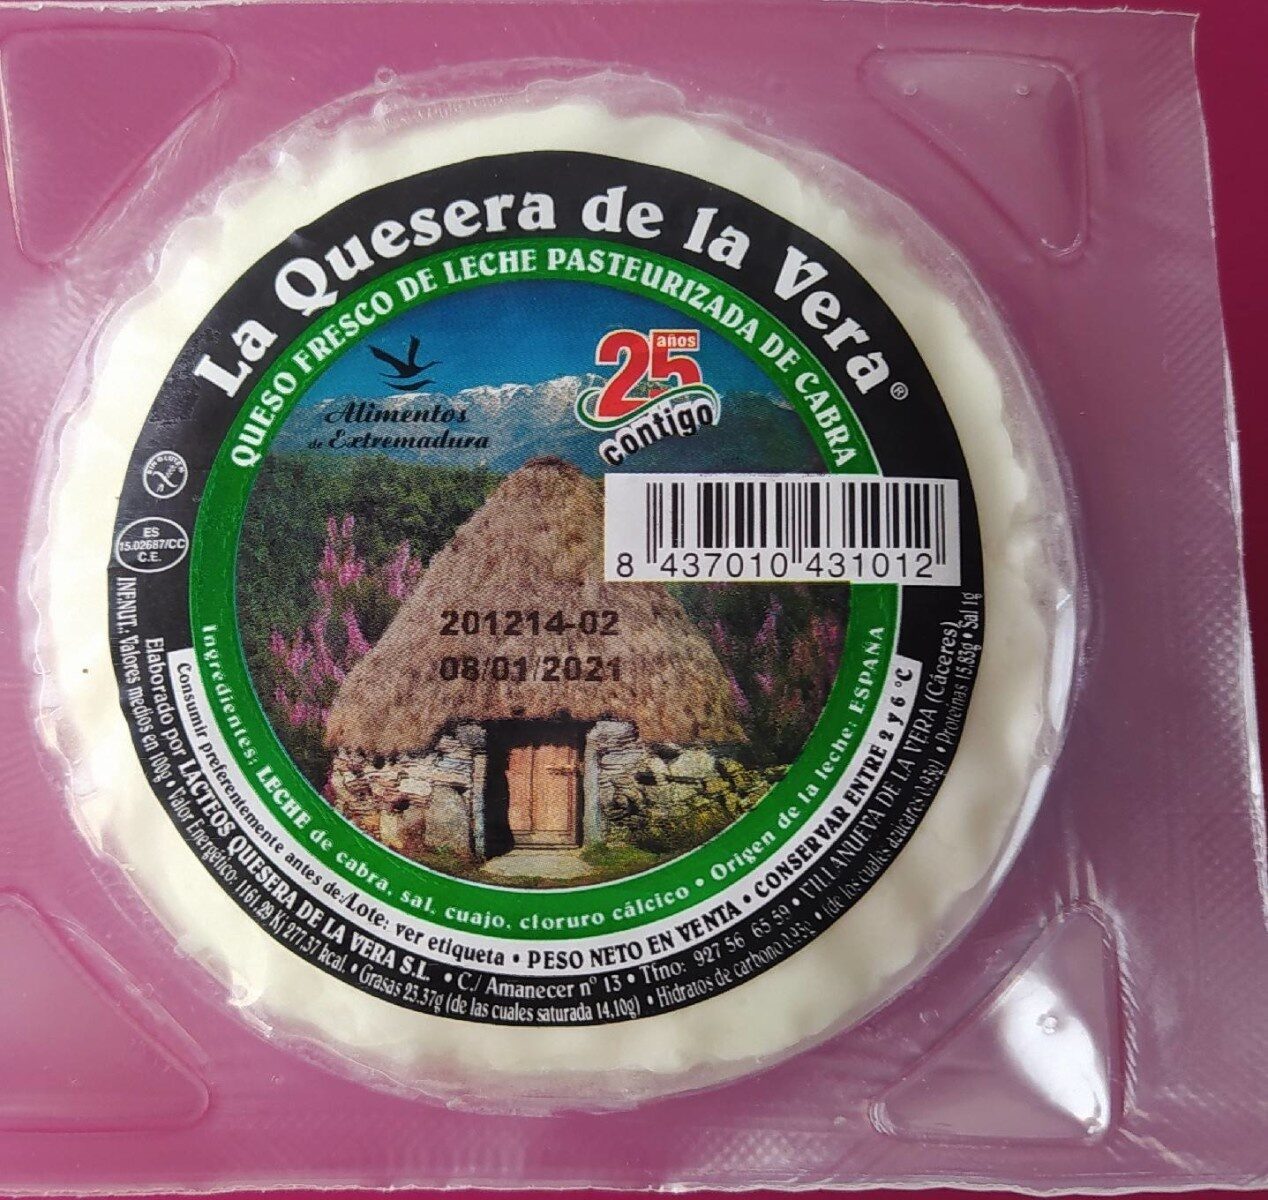 La quesera de la Vera - Producto